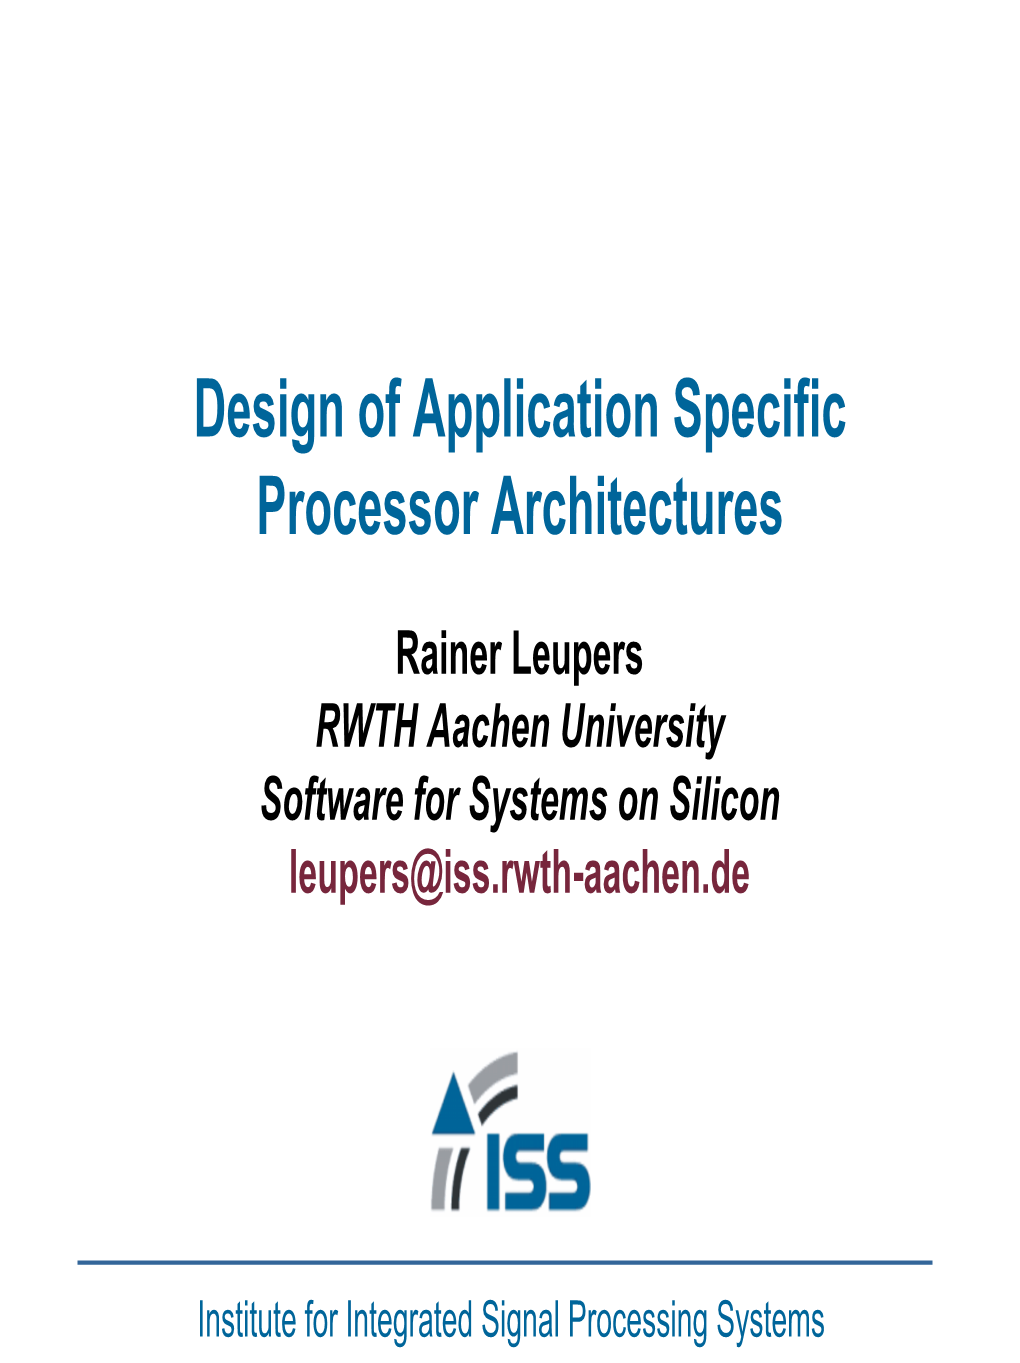 Design of Application Specific Processor Architectures